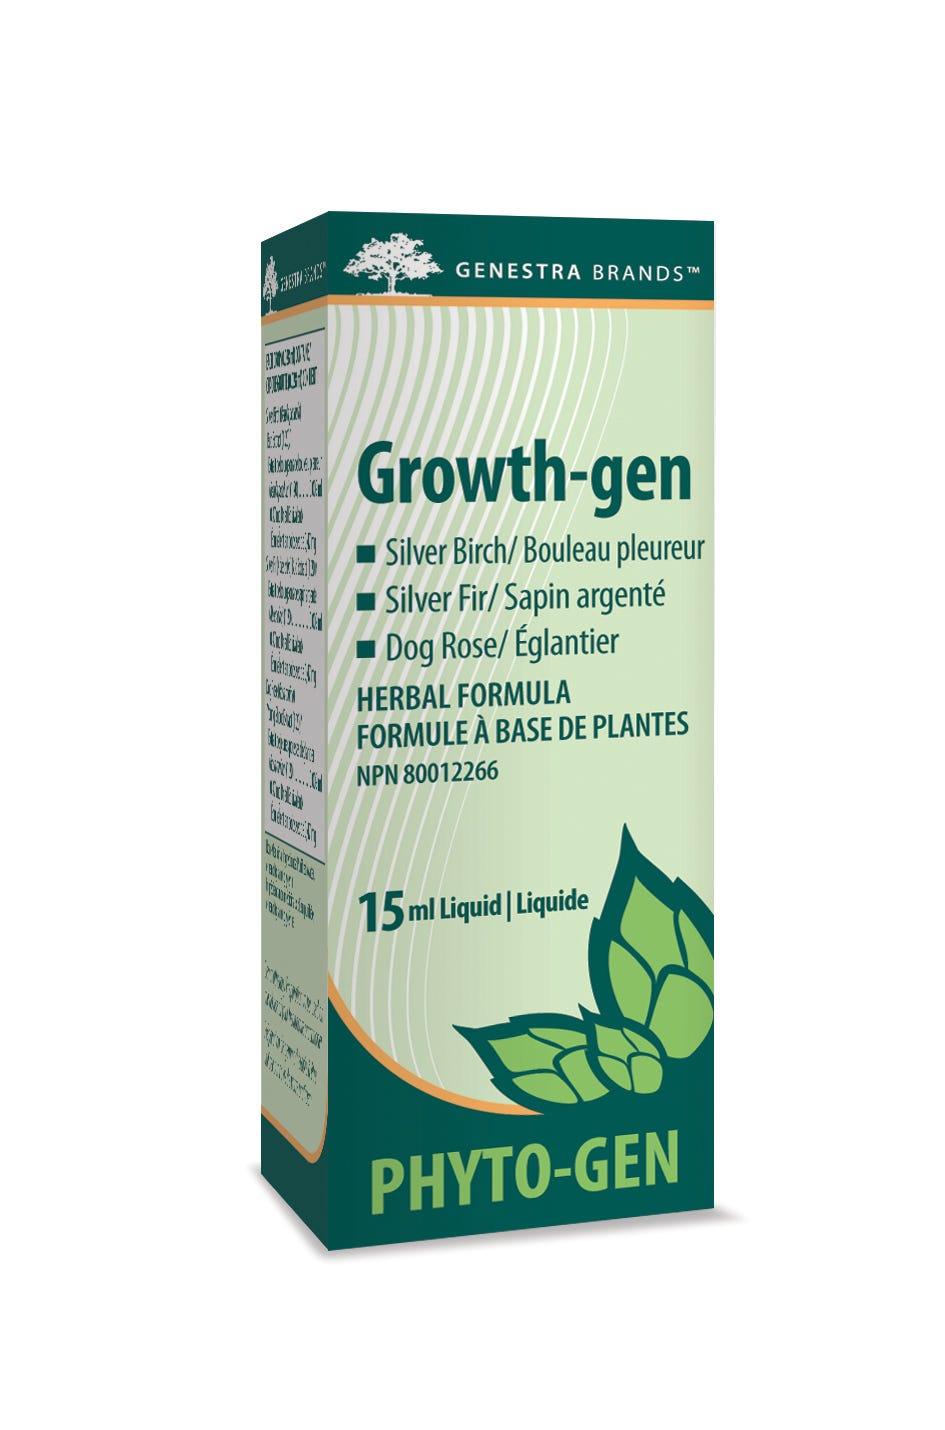 Genestra Brands Phyto-gen Growth-gen 15ml